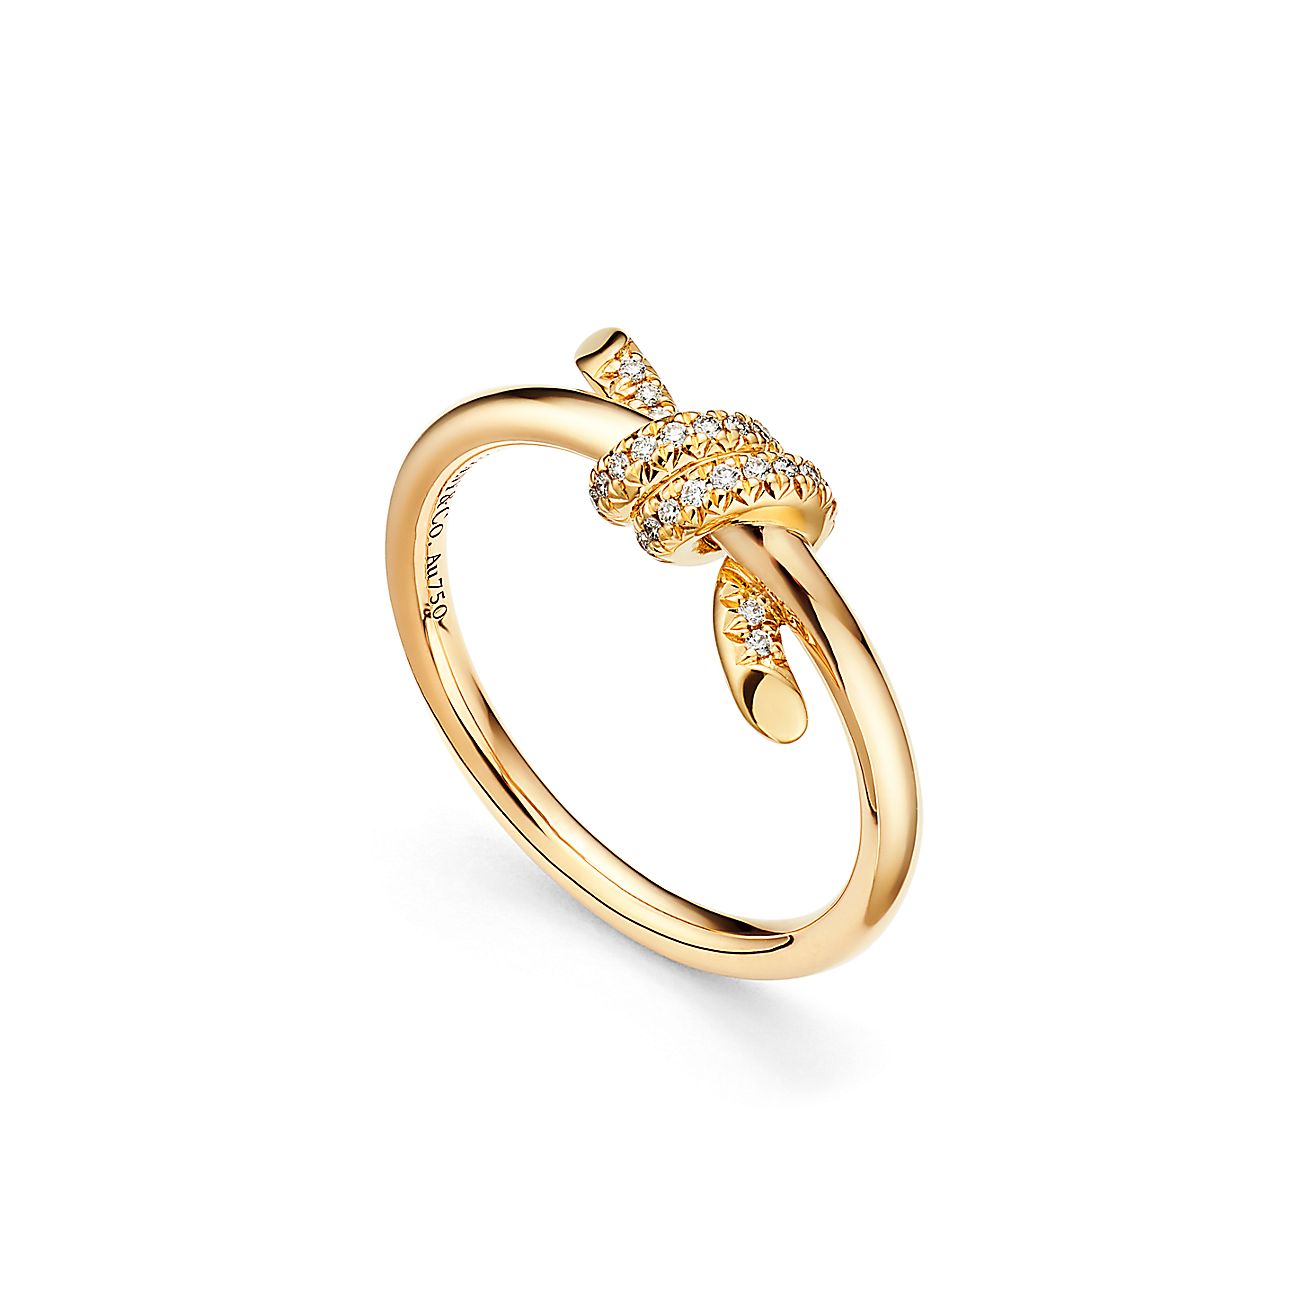 Tiffany & Co. 14k Gold Diamond Dice Ring